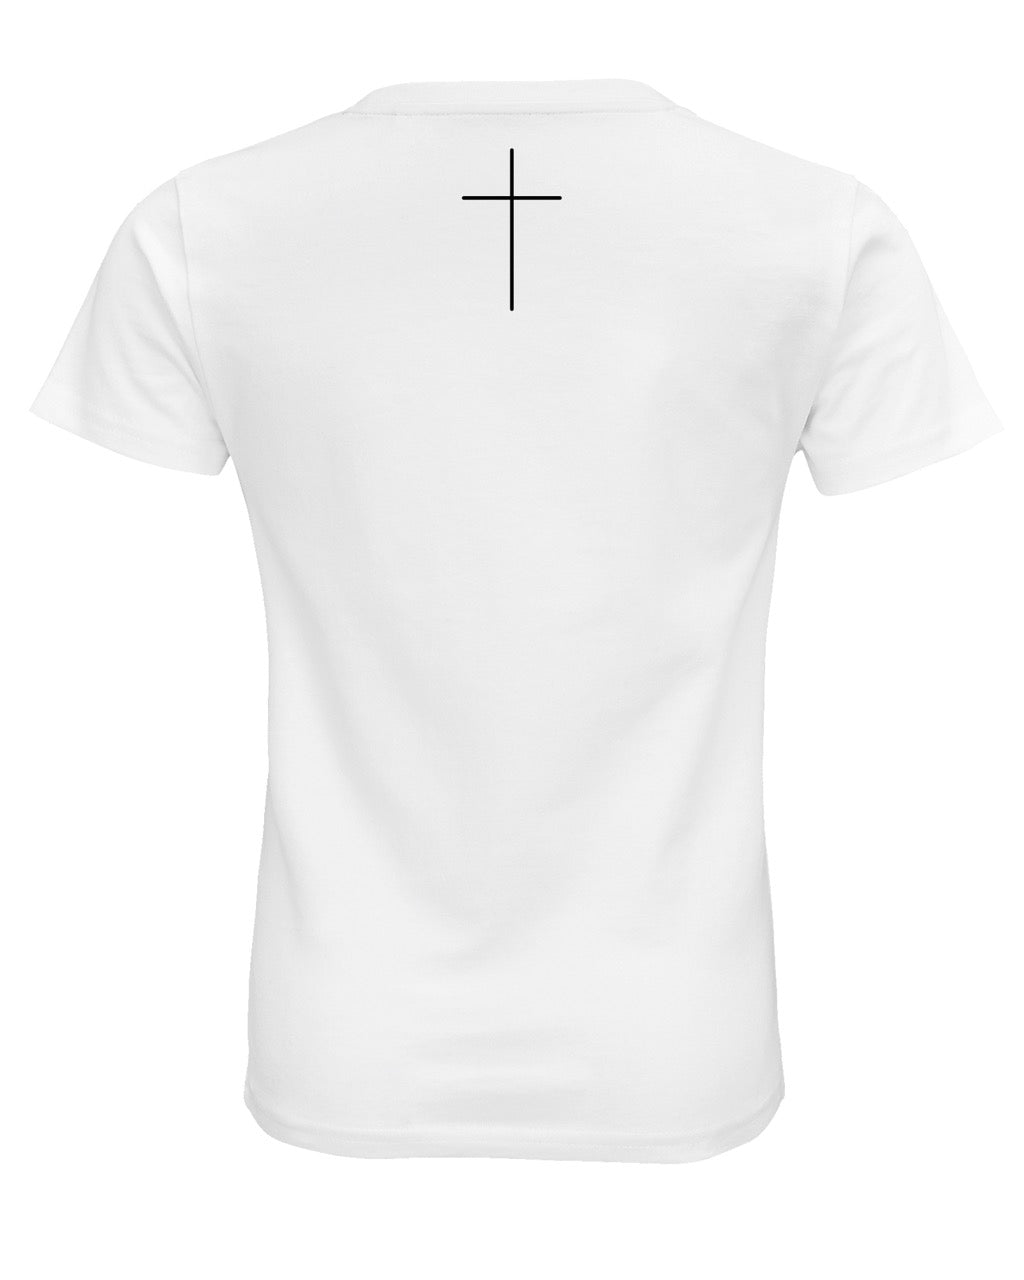 Children's T-Shirt - "Christian"